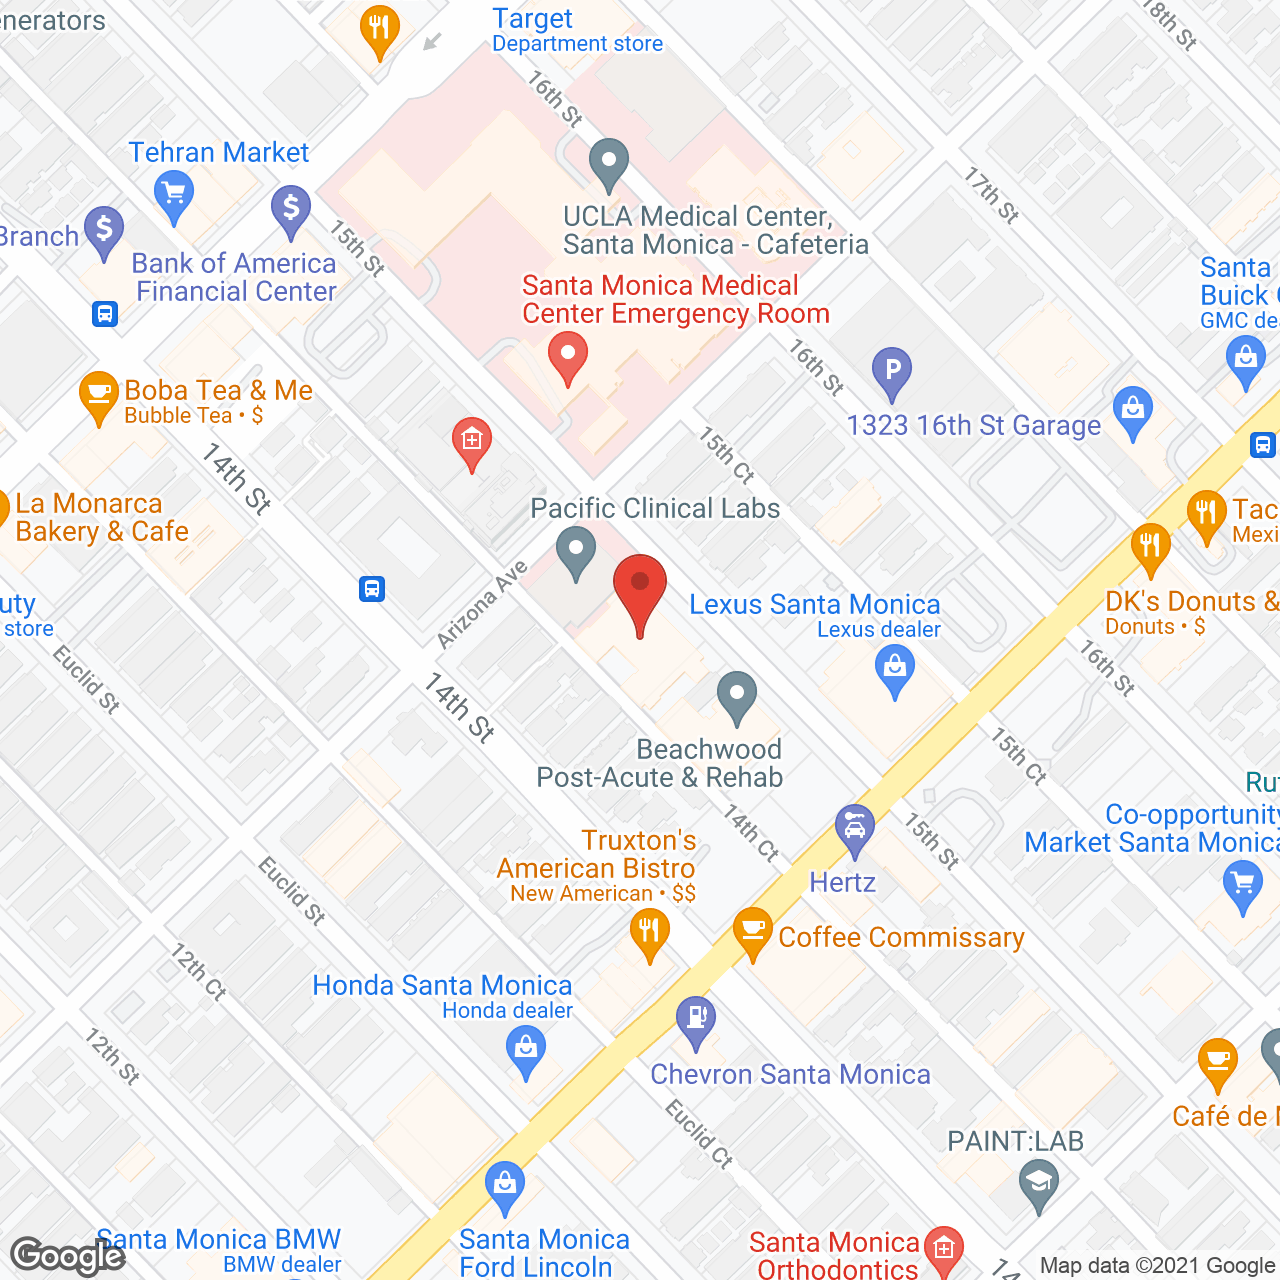 Sunrise of Santa Monica in google map